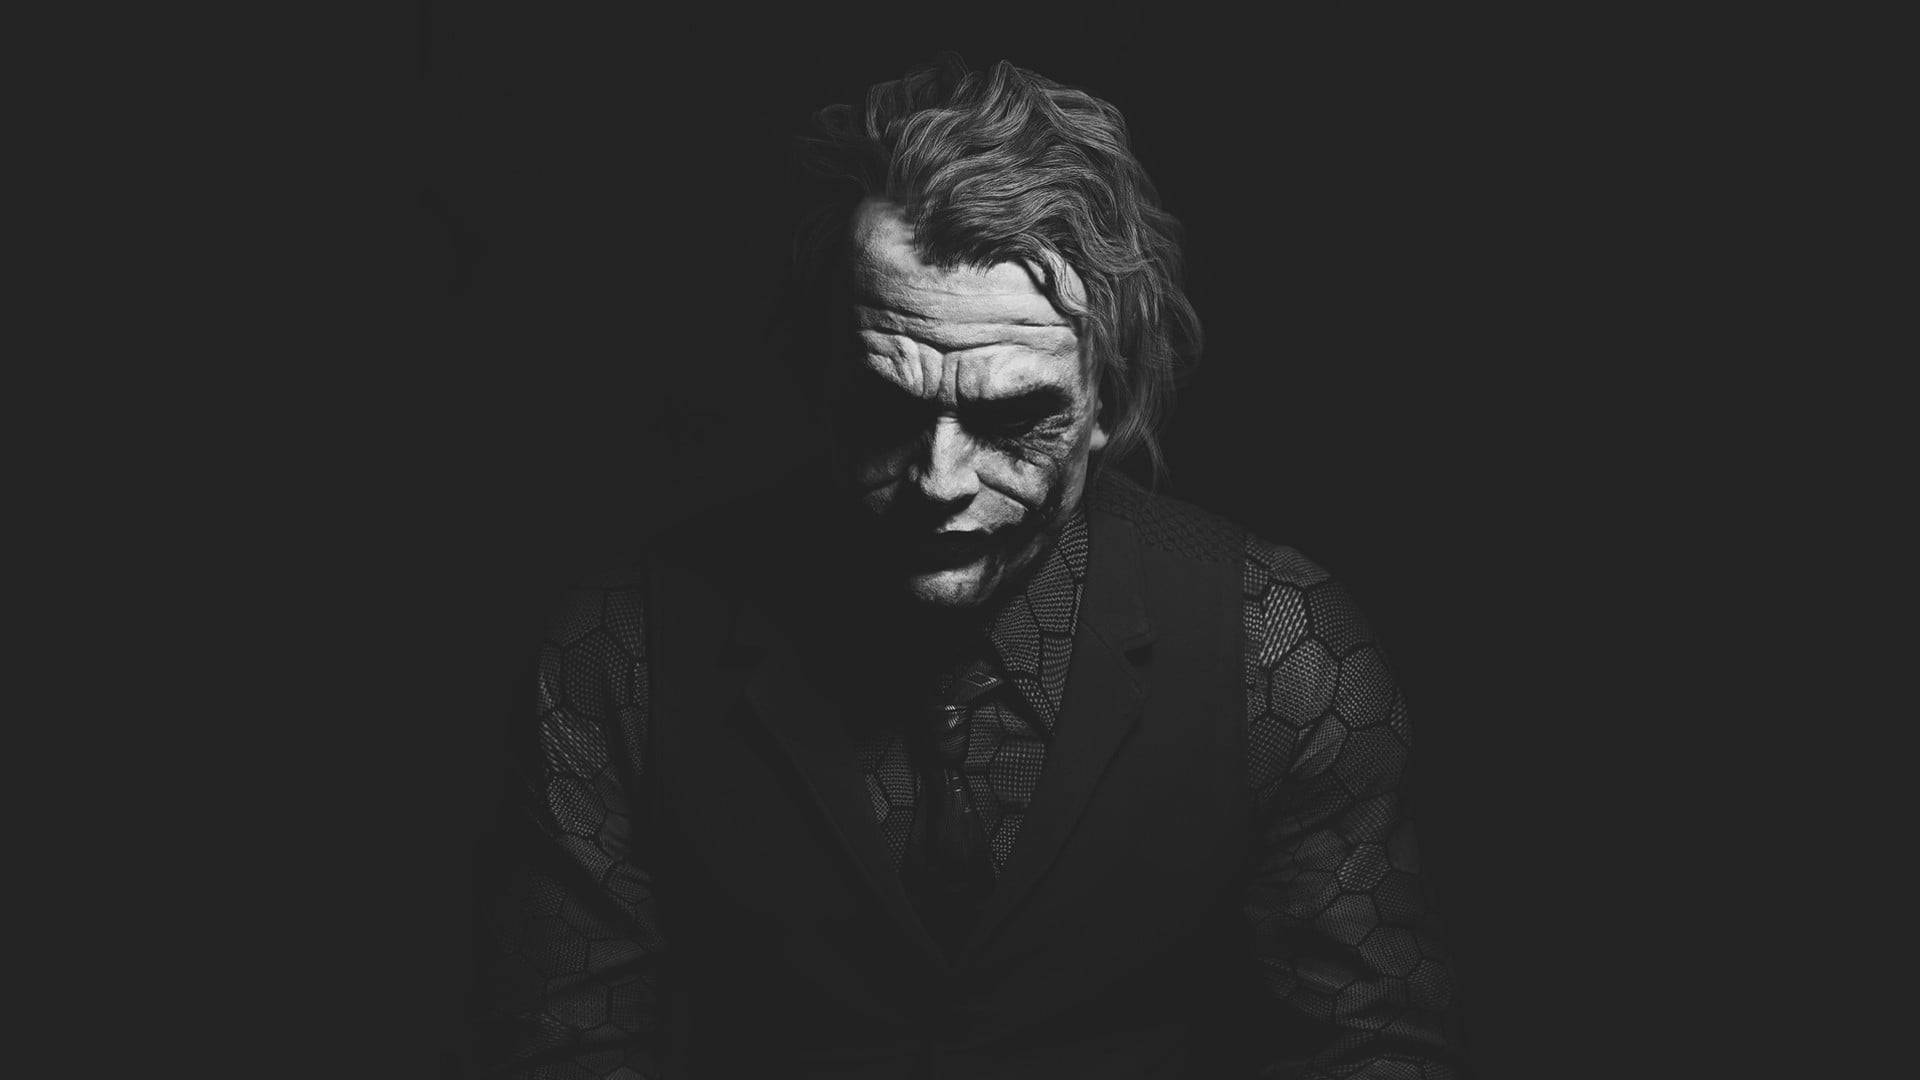 Grayscale Digital Art Heath Ledger Joker